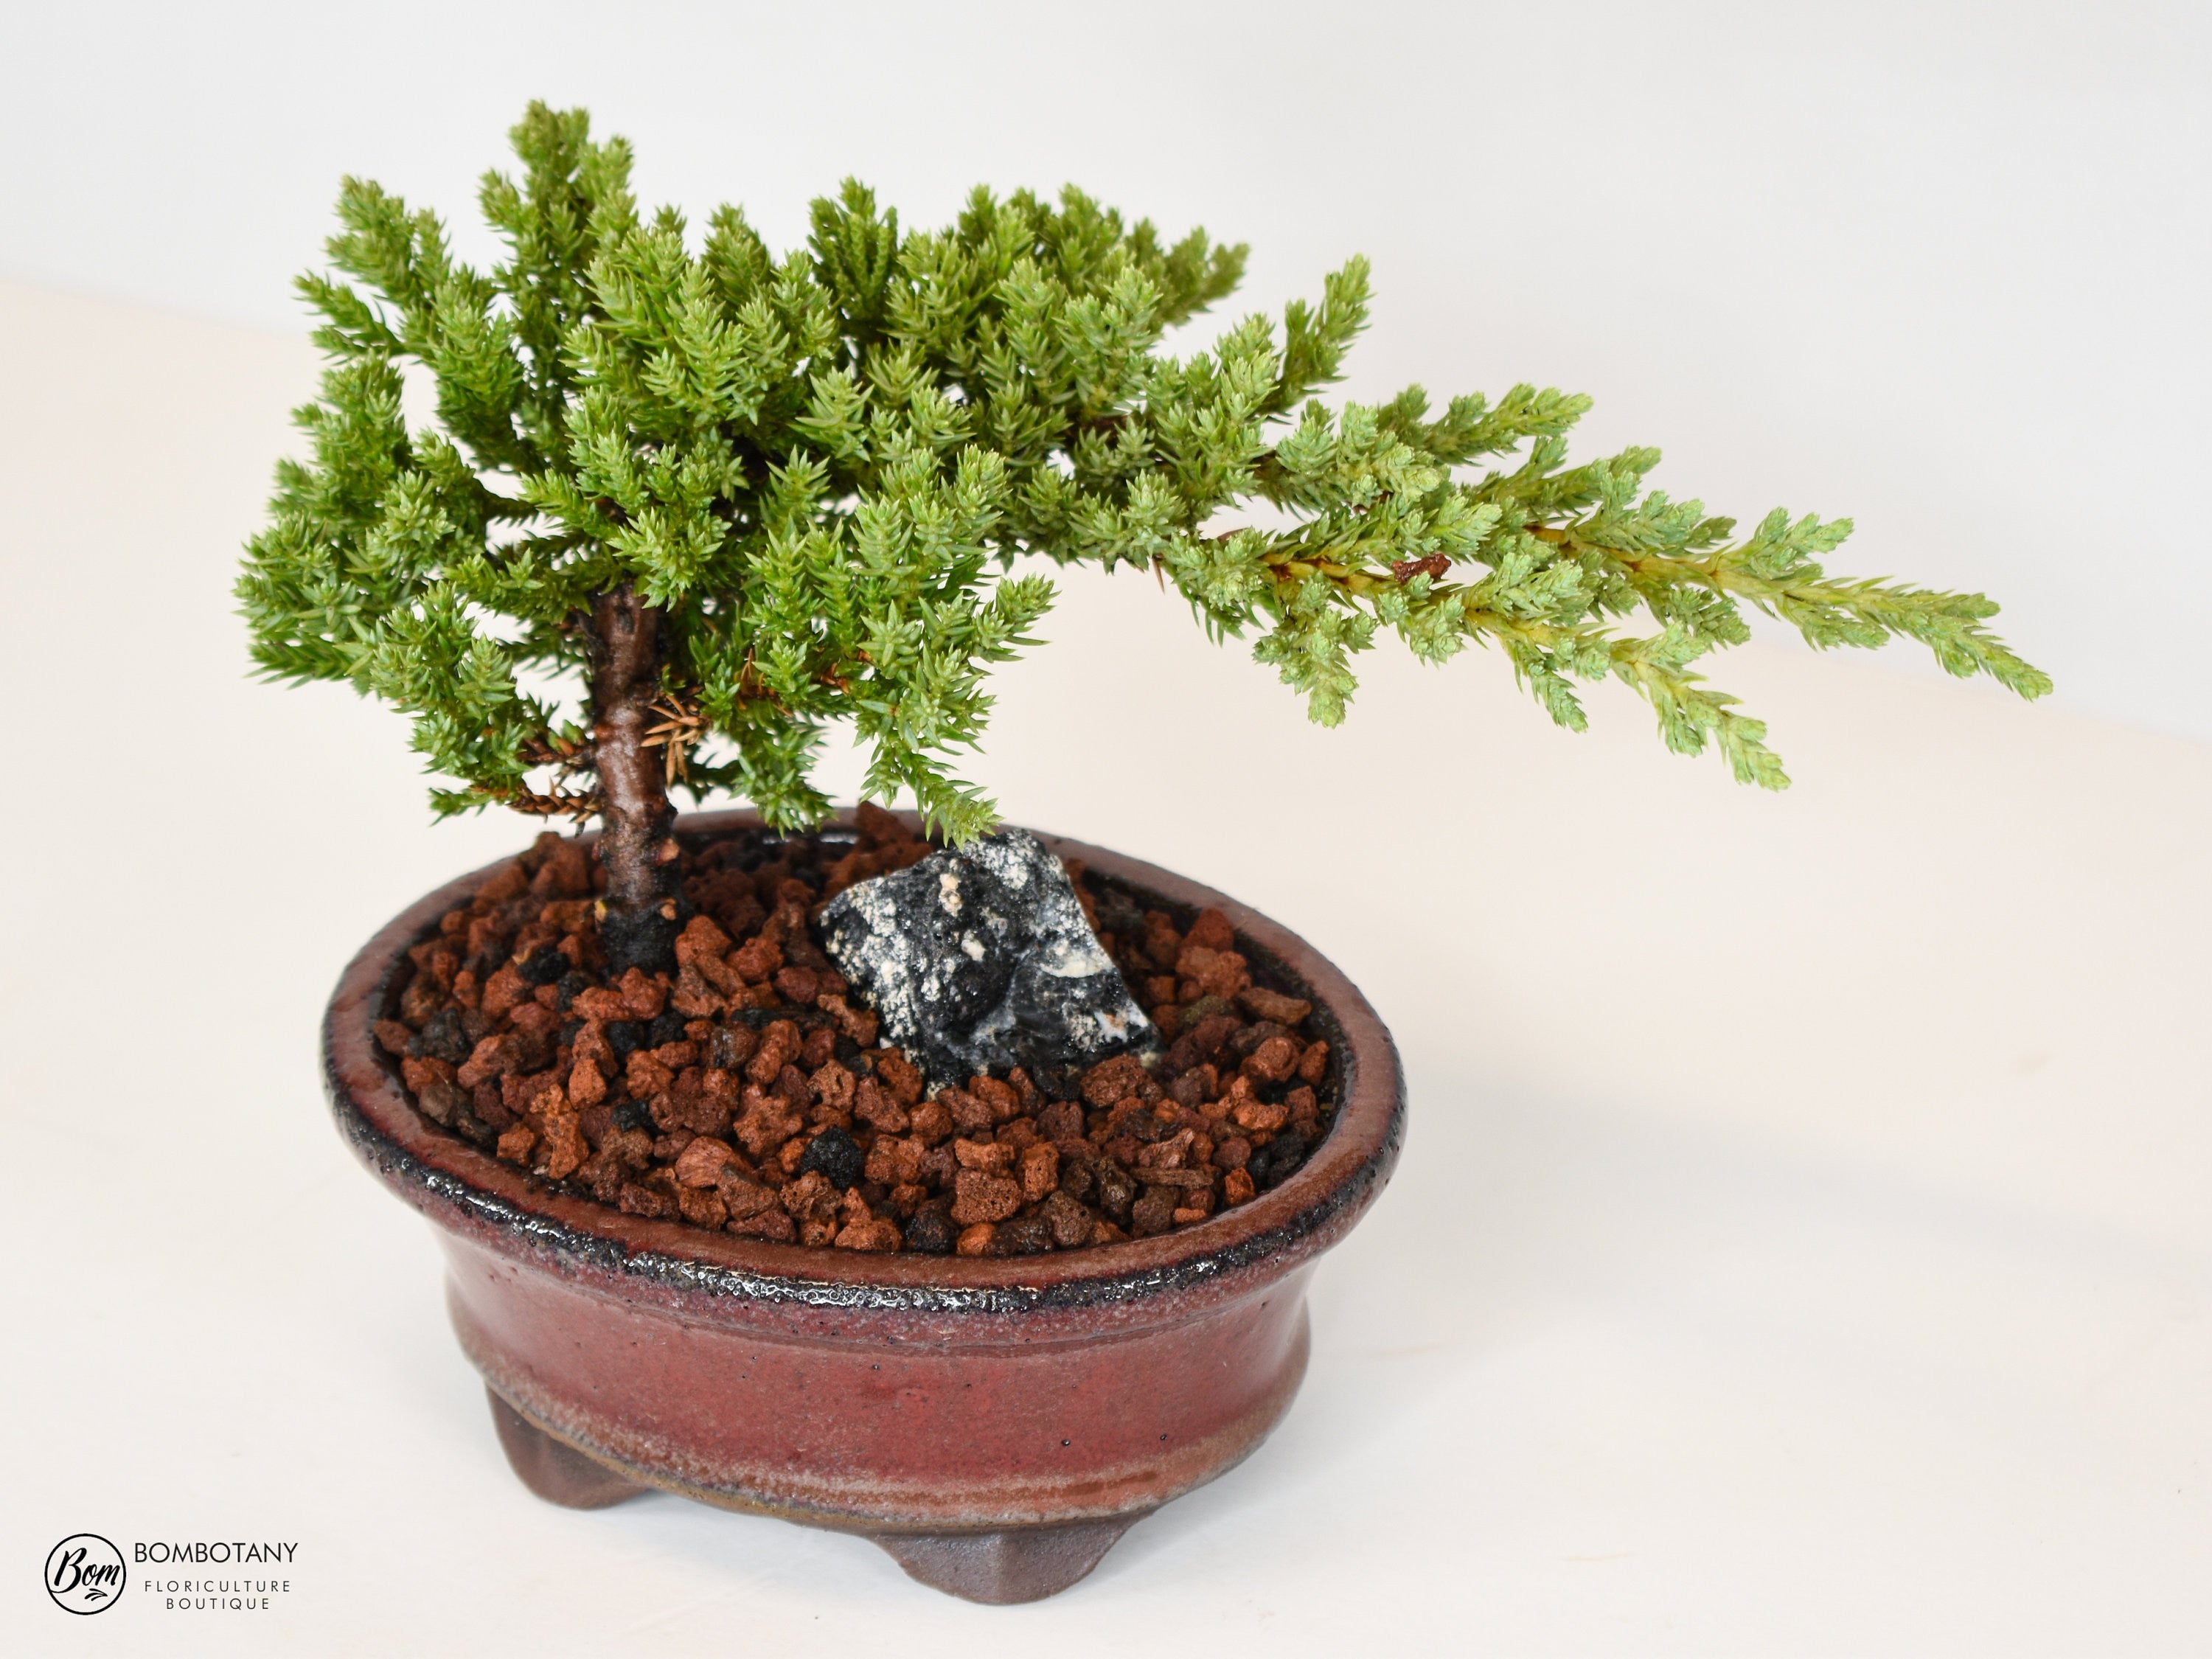 Juniper Procumbens 'Nana' Bonsai Tree in Traditional Ceramic - 3-4 Years Old